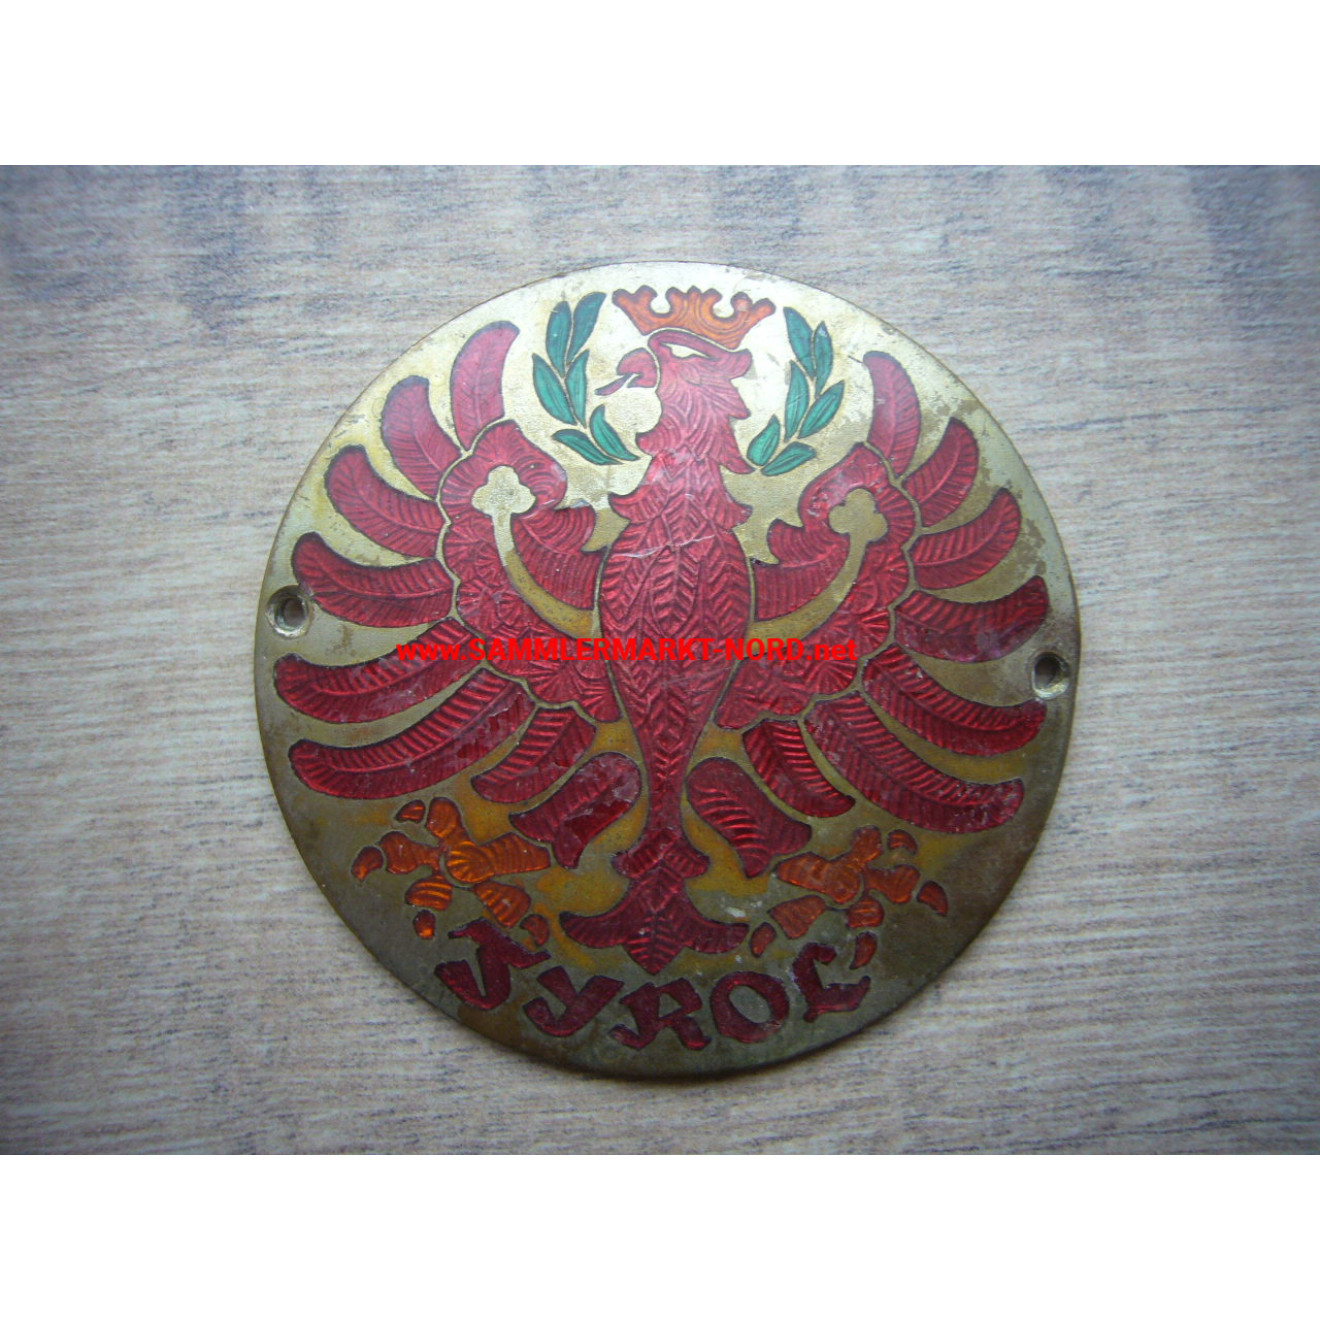 Austria - Tyrolean eagle - Car badge